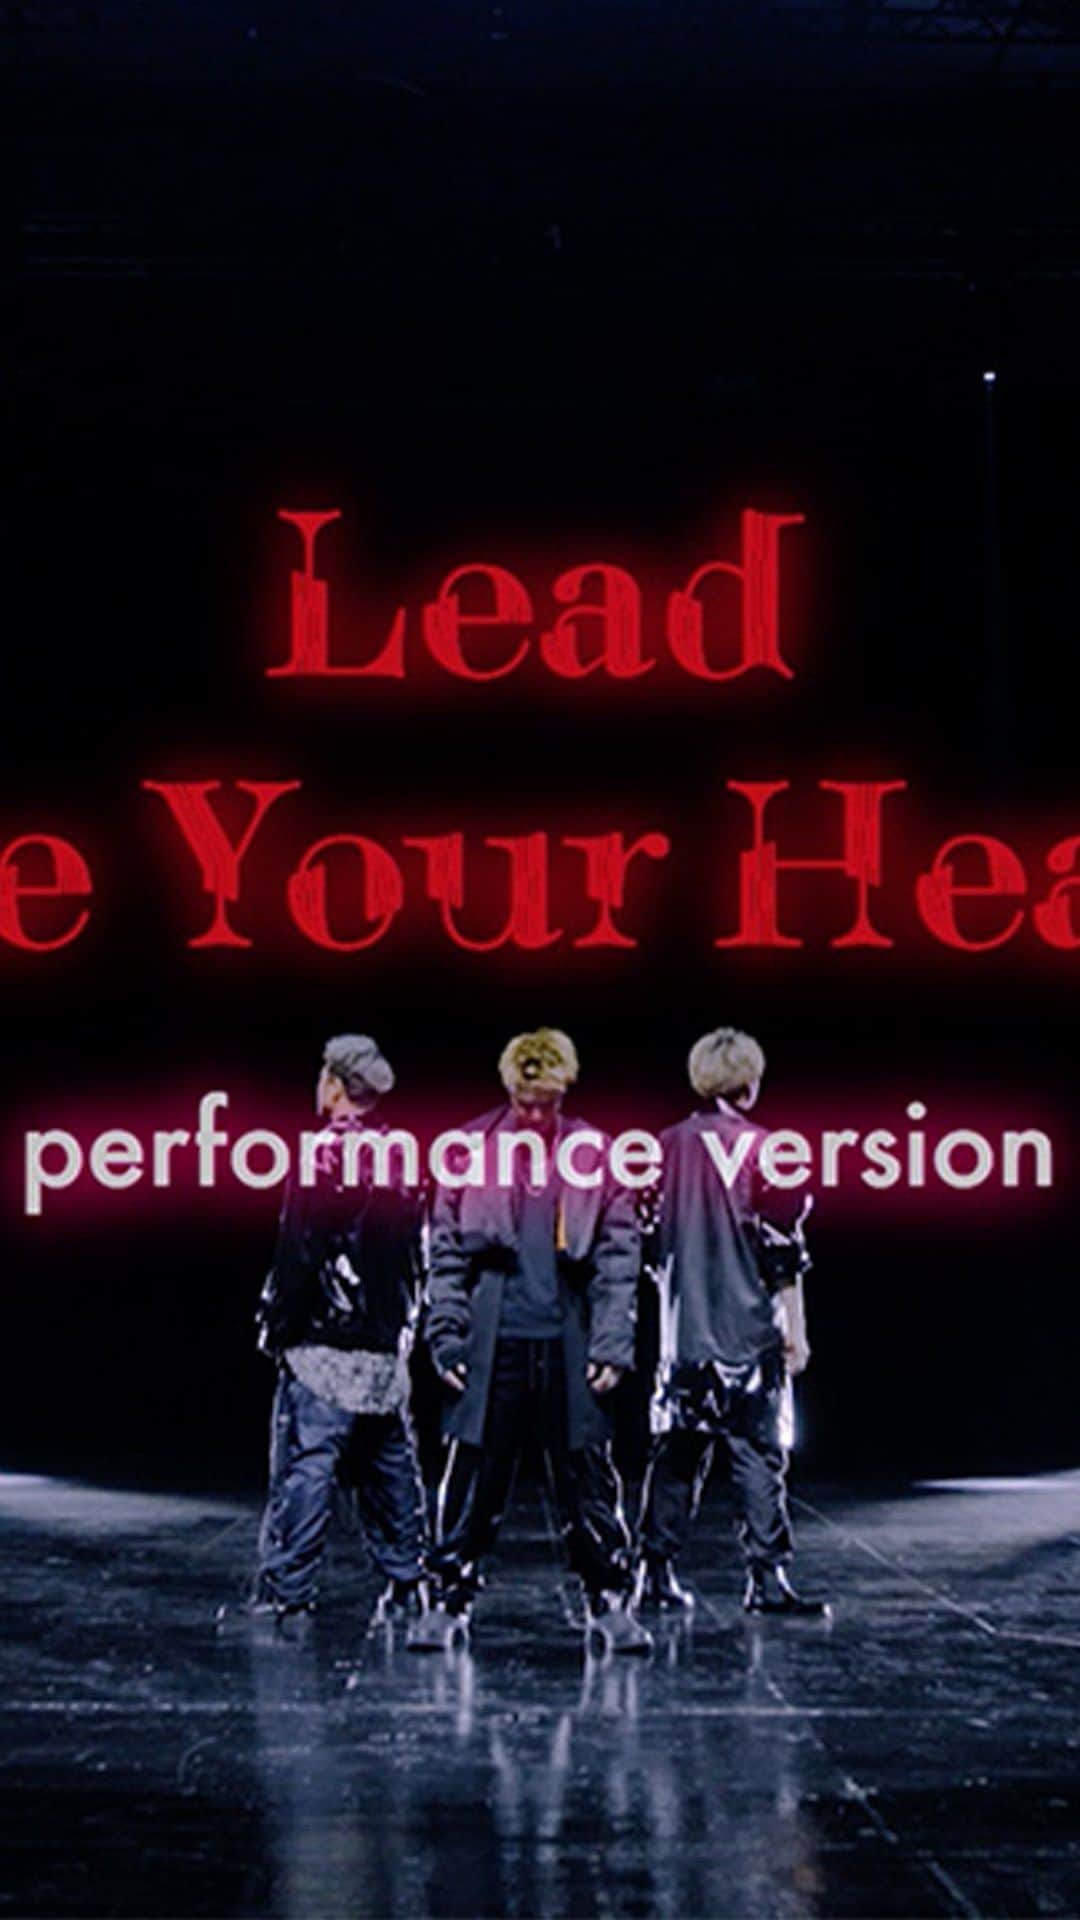 Lead【公式】のインスタグラム